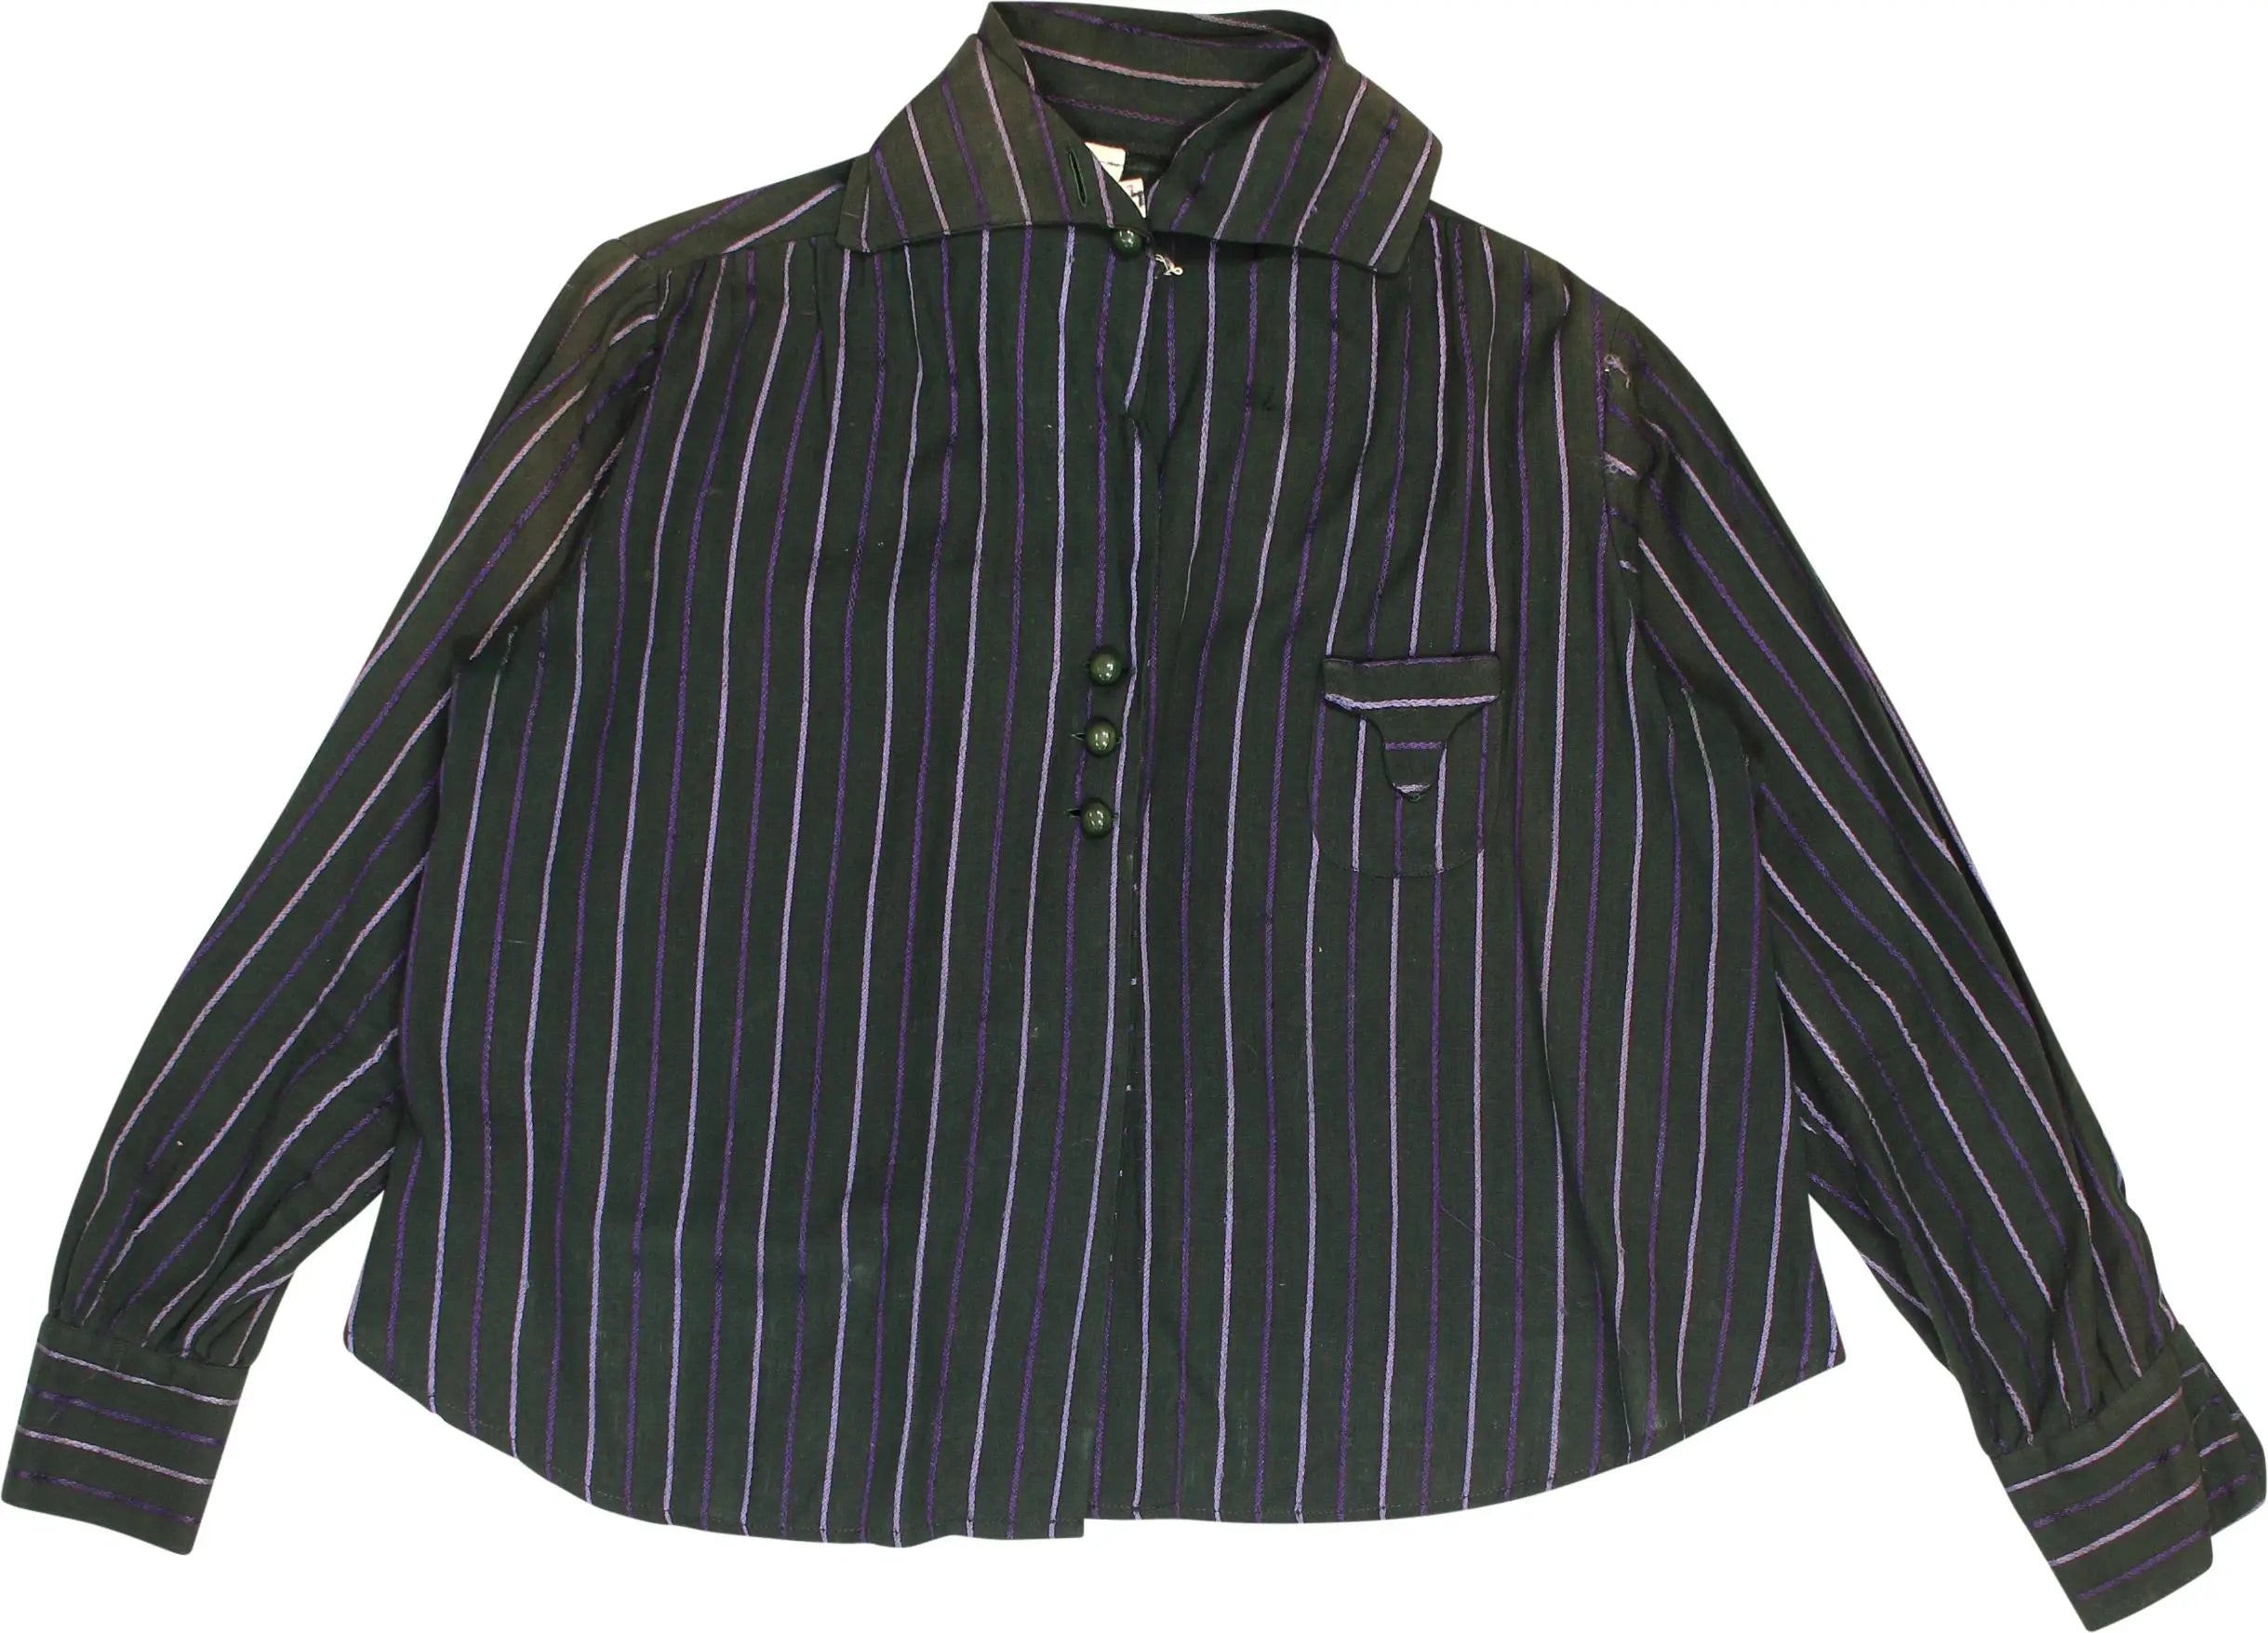 Handmade - Handmade Striped Shirt- ThriftTale.com - Vintage and second handclothing